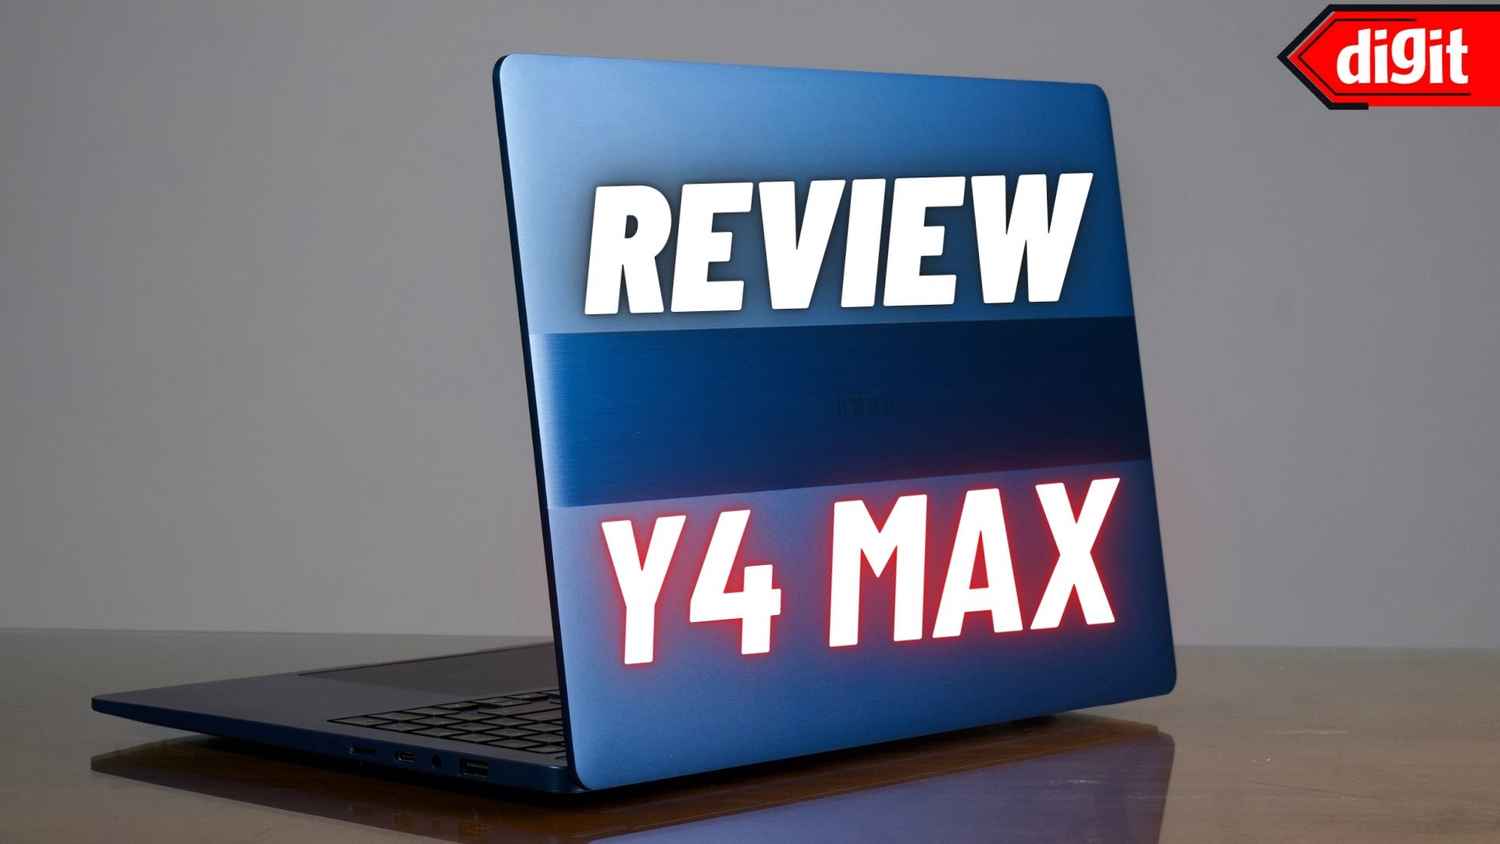 Infinix Y4 Max: Best Windows Laptop Under Rs 35,000 in India?